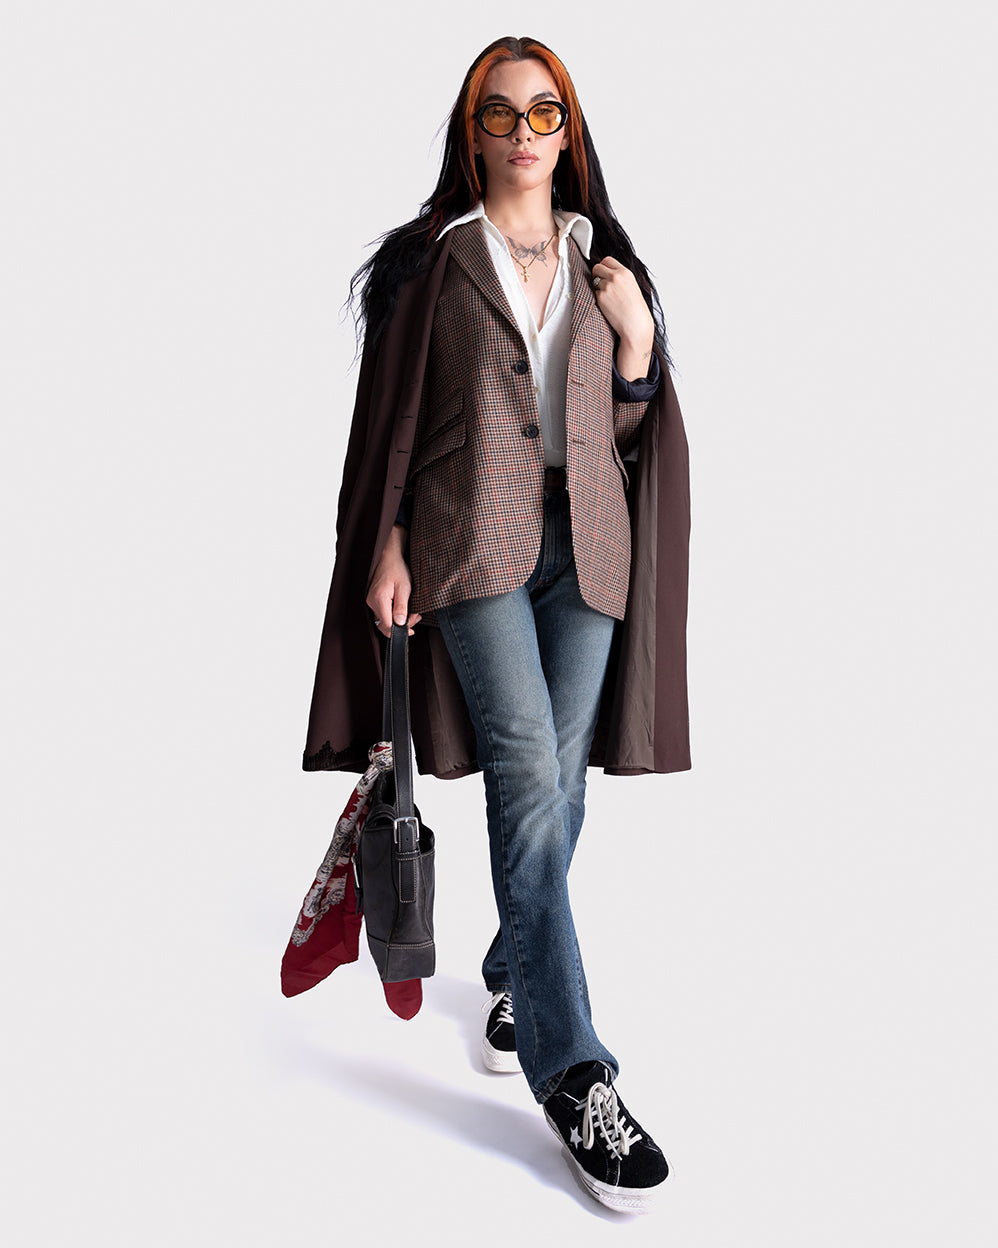 Brown Valentino coat